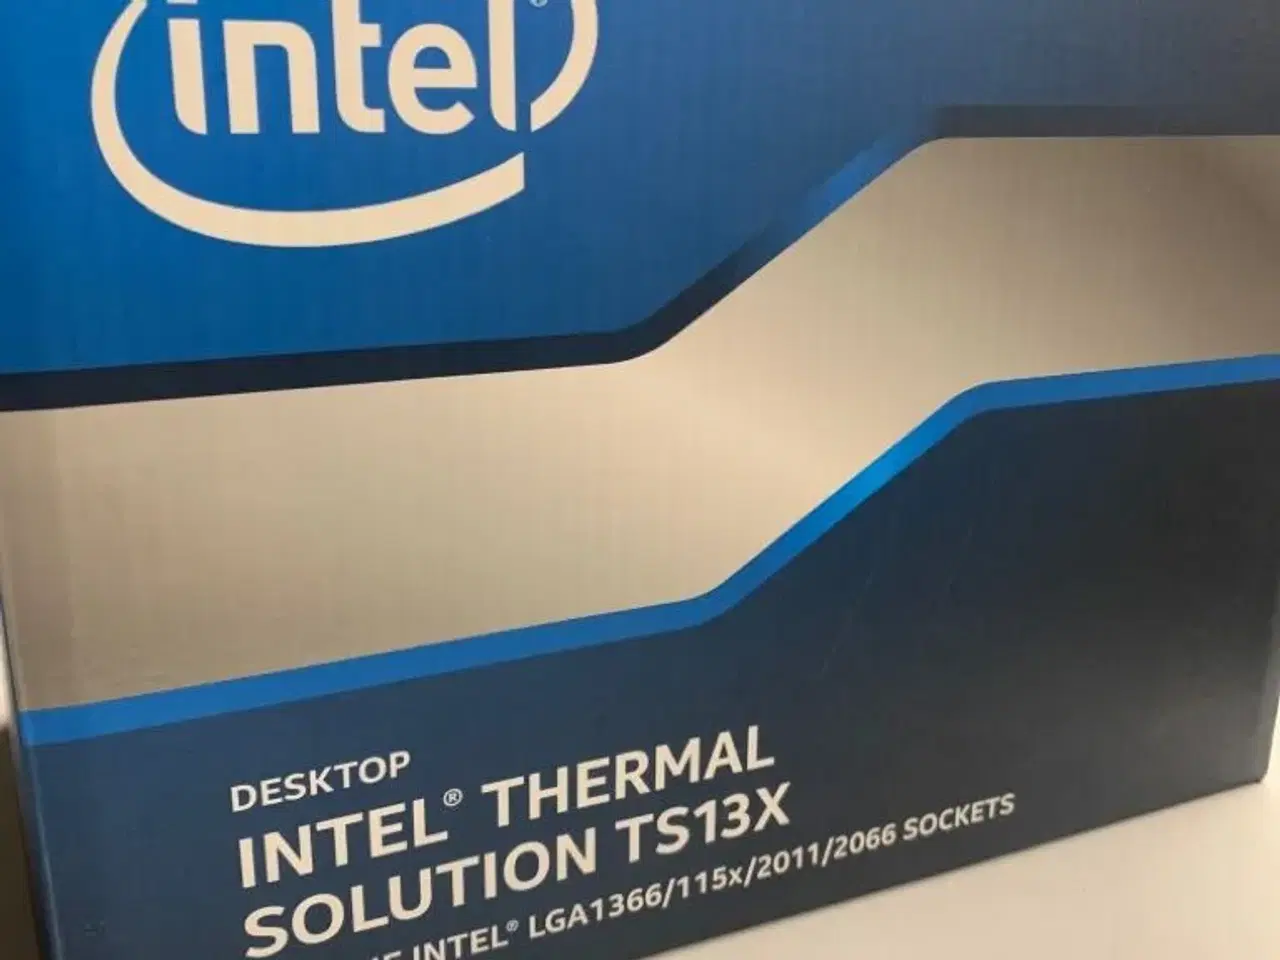 Billede 1 - NY! Intel vandkøler